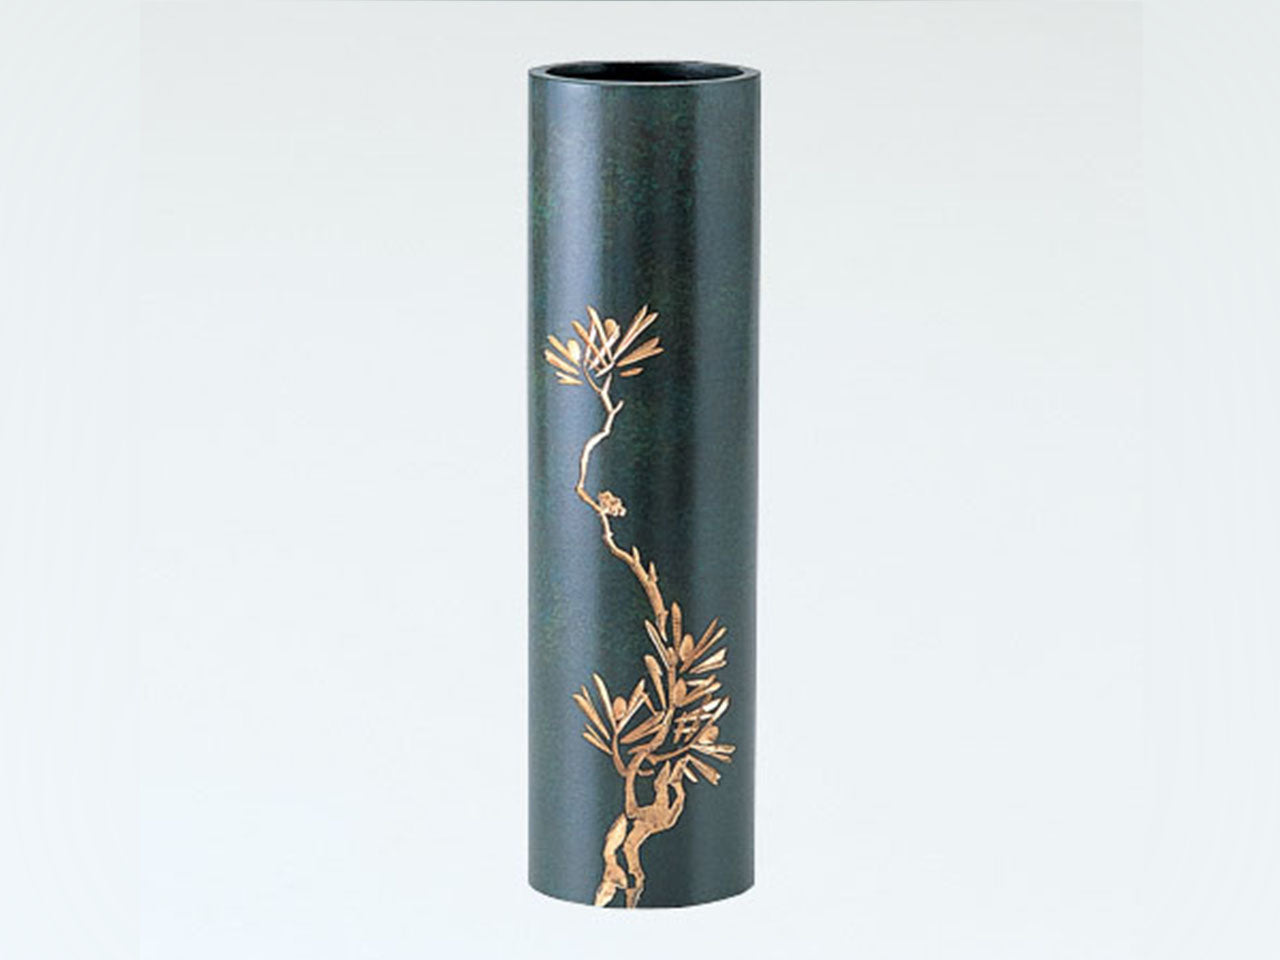 Flower vessel, Vase, Cylindrical column, Pine - Takaoka copperware, Metalwork